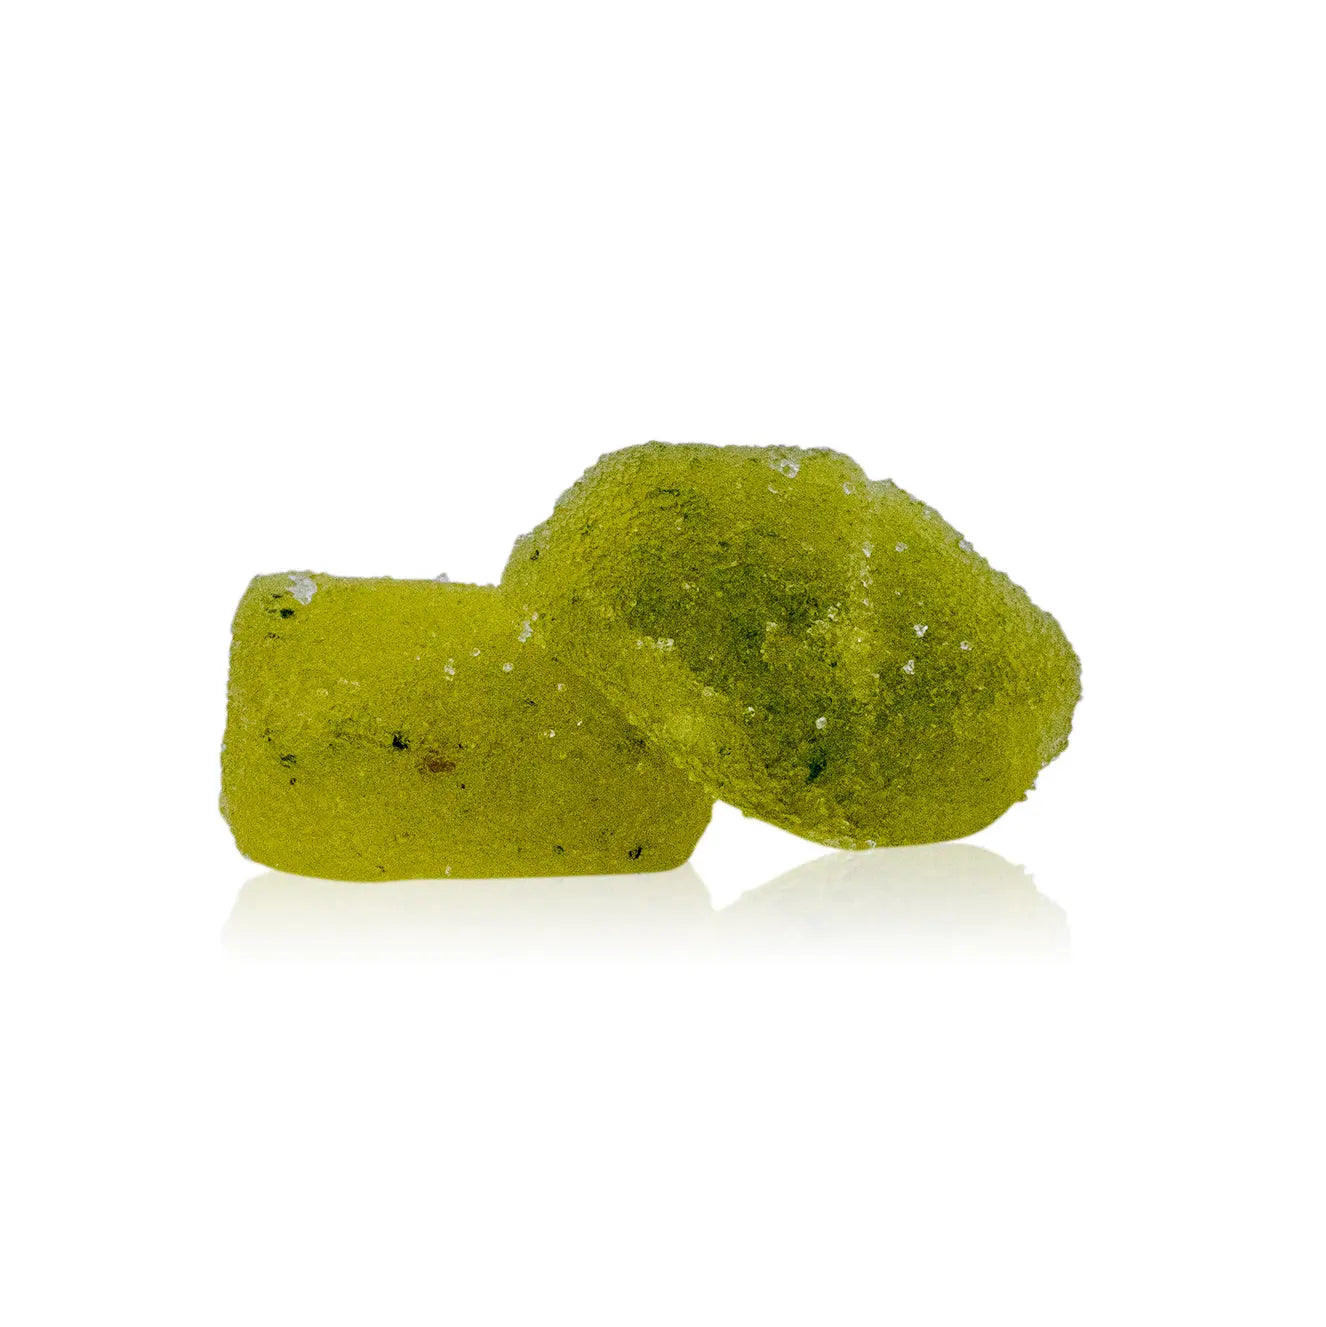 HHC Gummies 100mg  2 Pack Green Apple Siesta-G